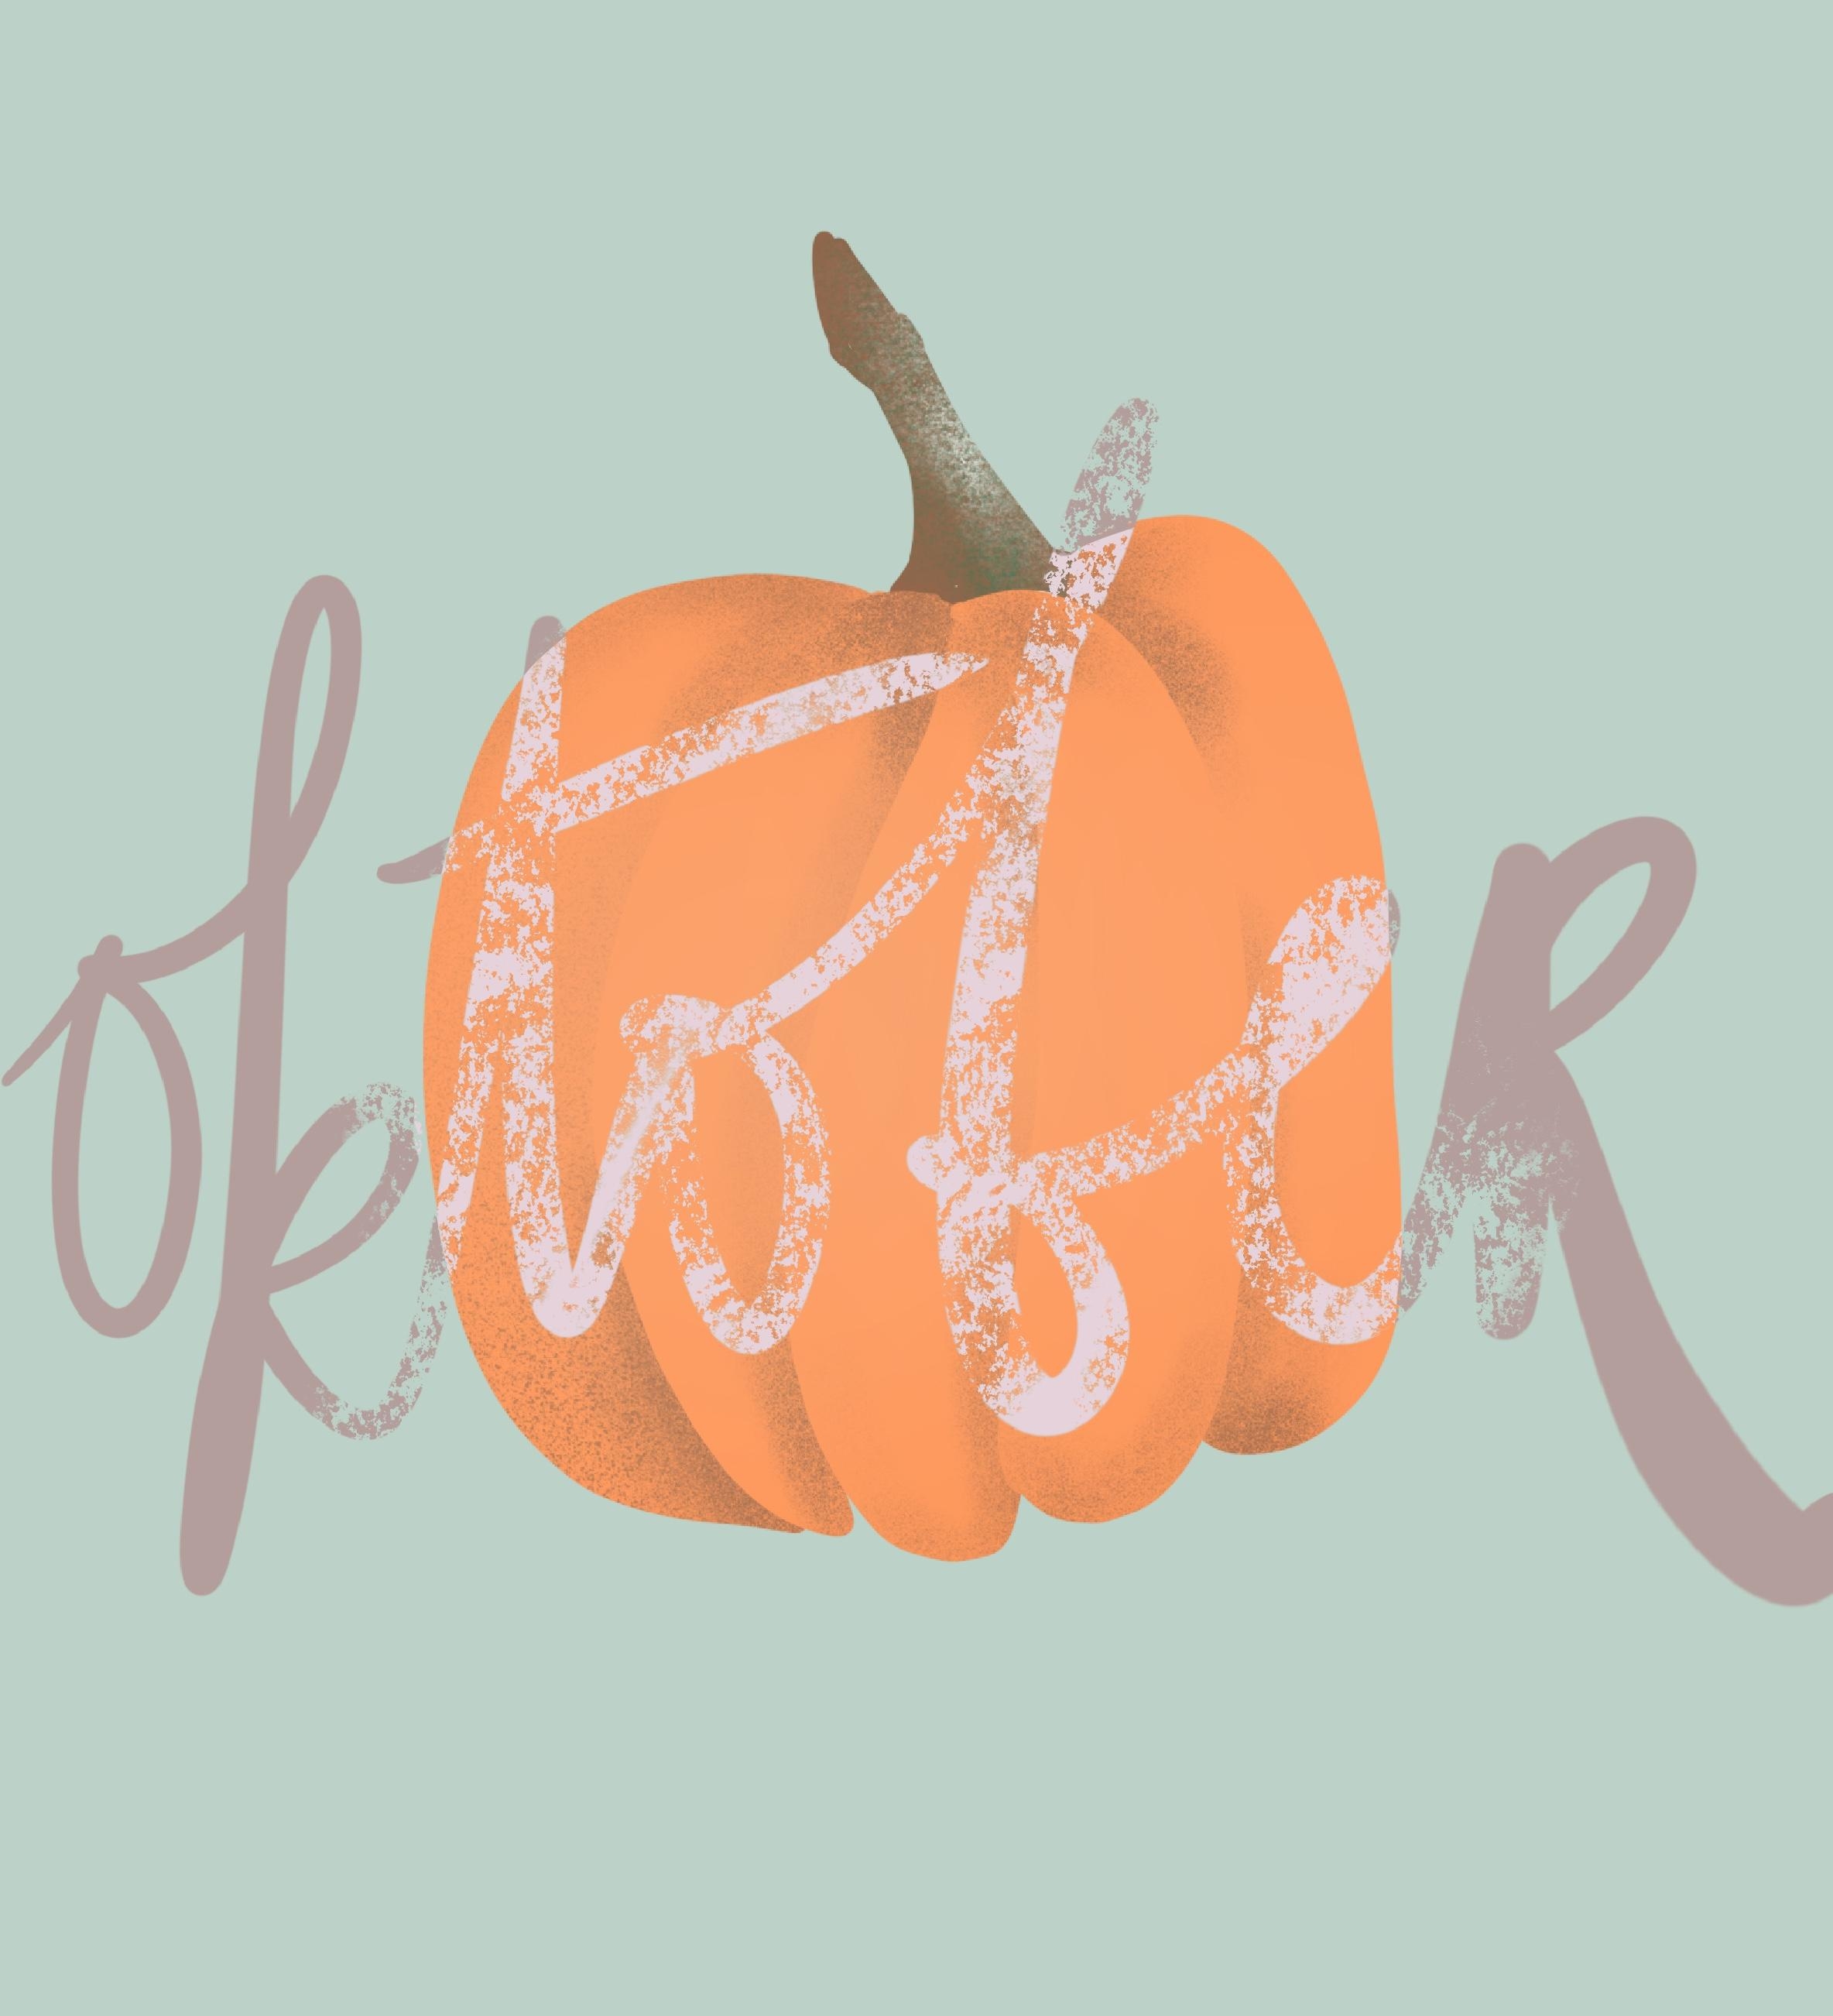 #oktober #pumpkingtime #illustration
©Alyona Rutzen